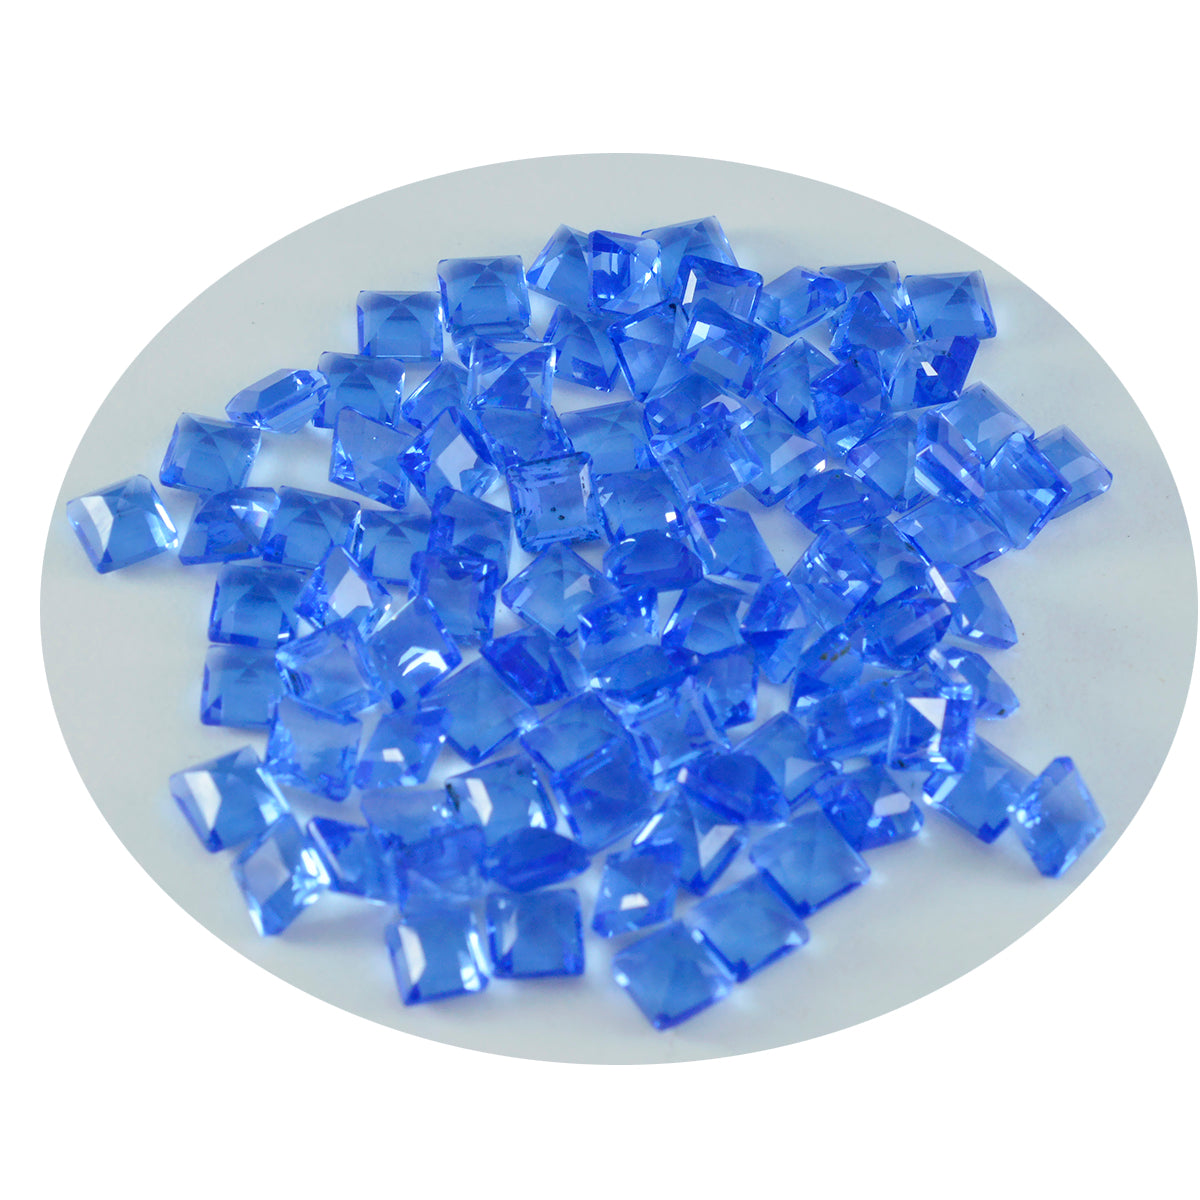 Riyogems 1PC Blue Sapphire CZ Faceted 4x4 mm Square Shape A1 Quality Loose Stone